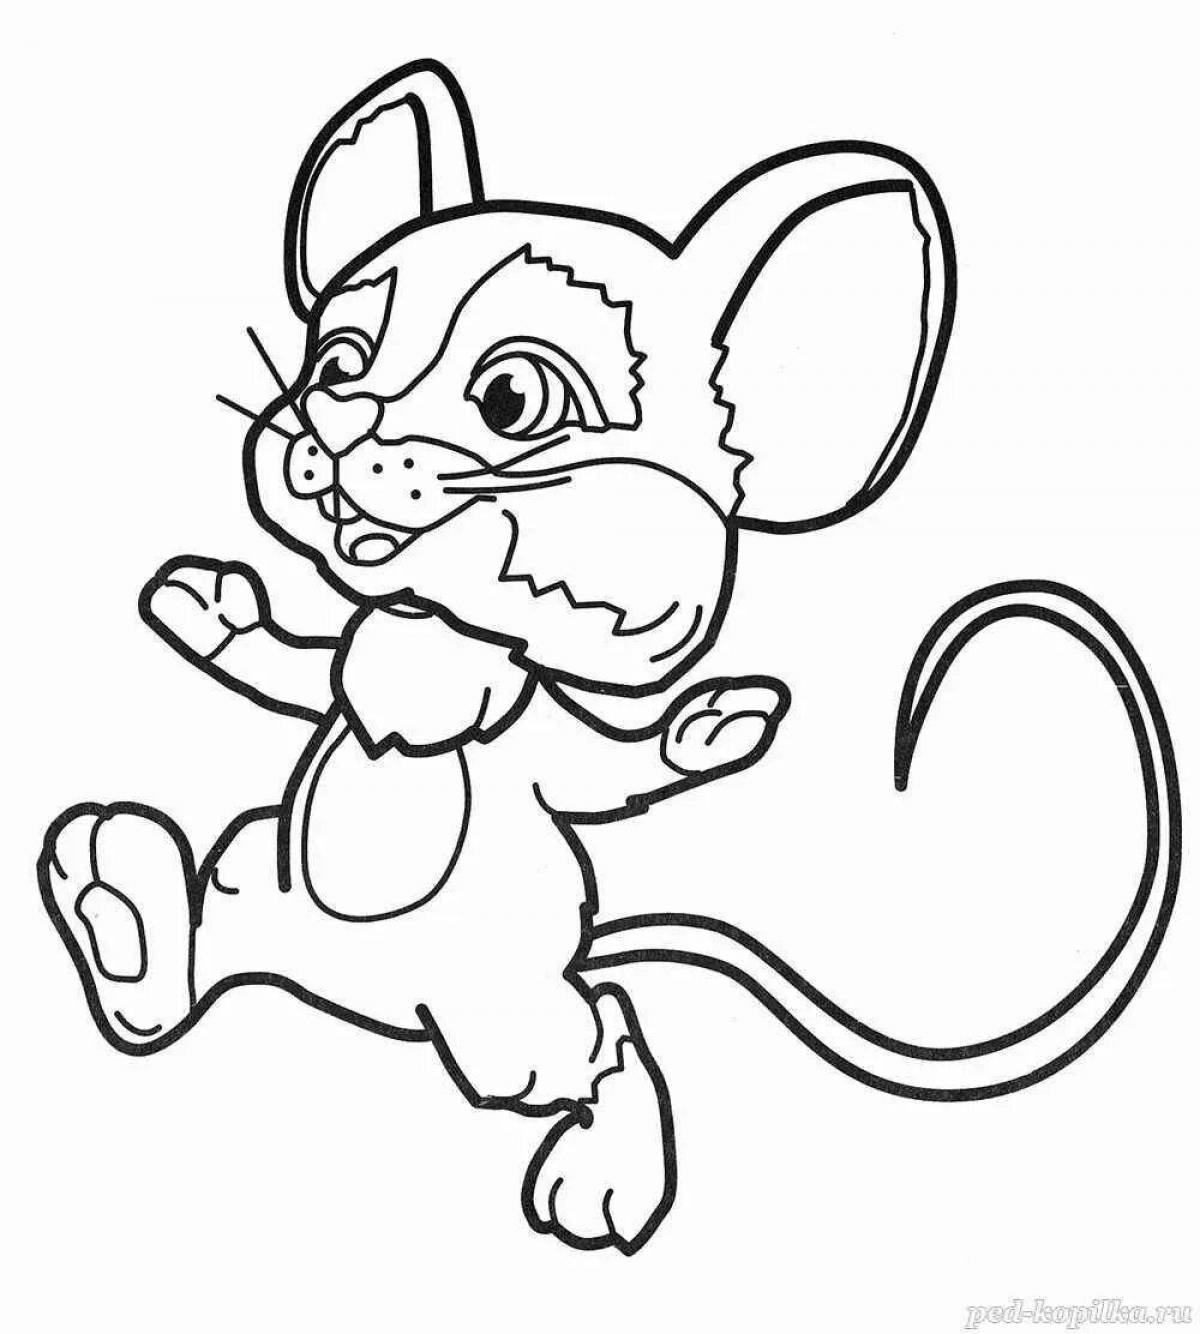 Раскраска праздничная мышка норушка